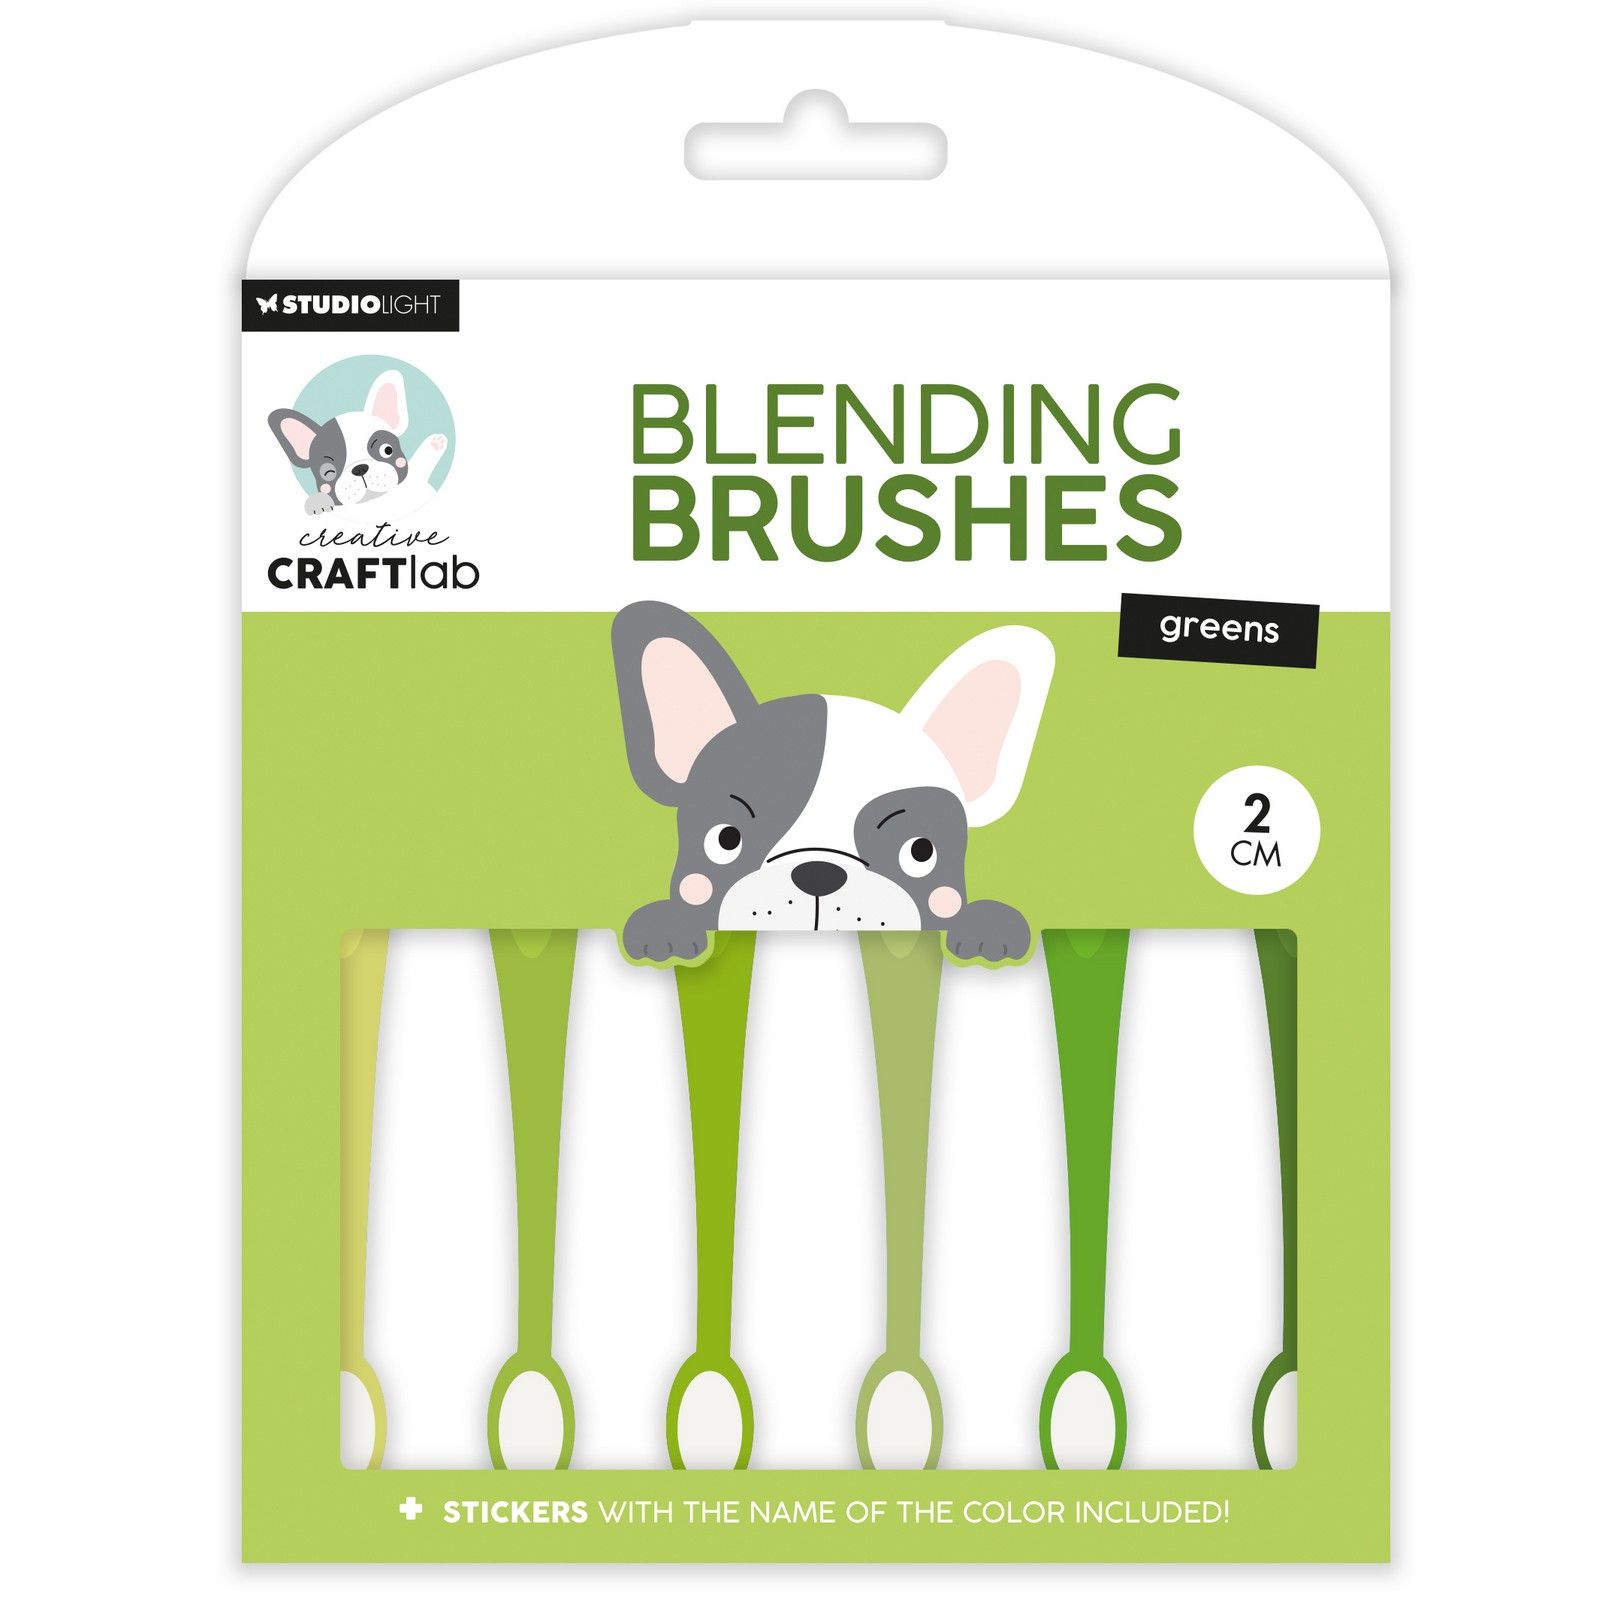 Creative Craftlab • Essentials Blending Brushes 2cm Soft Brush Greens